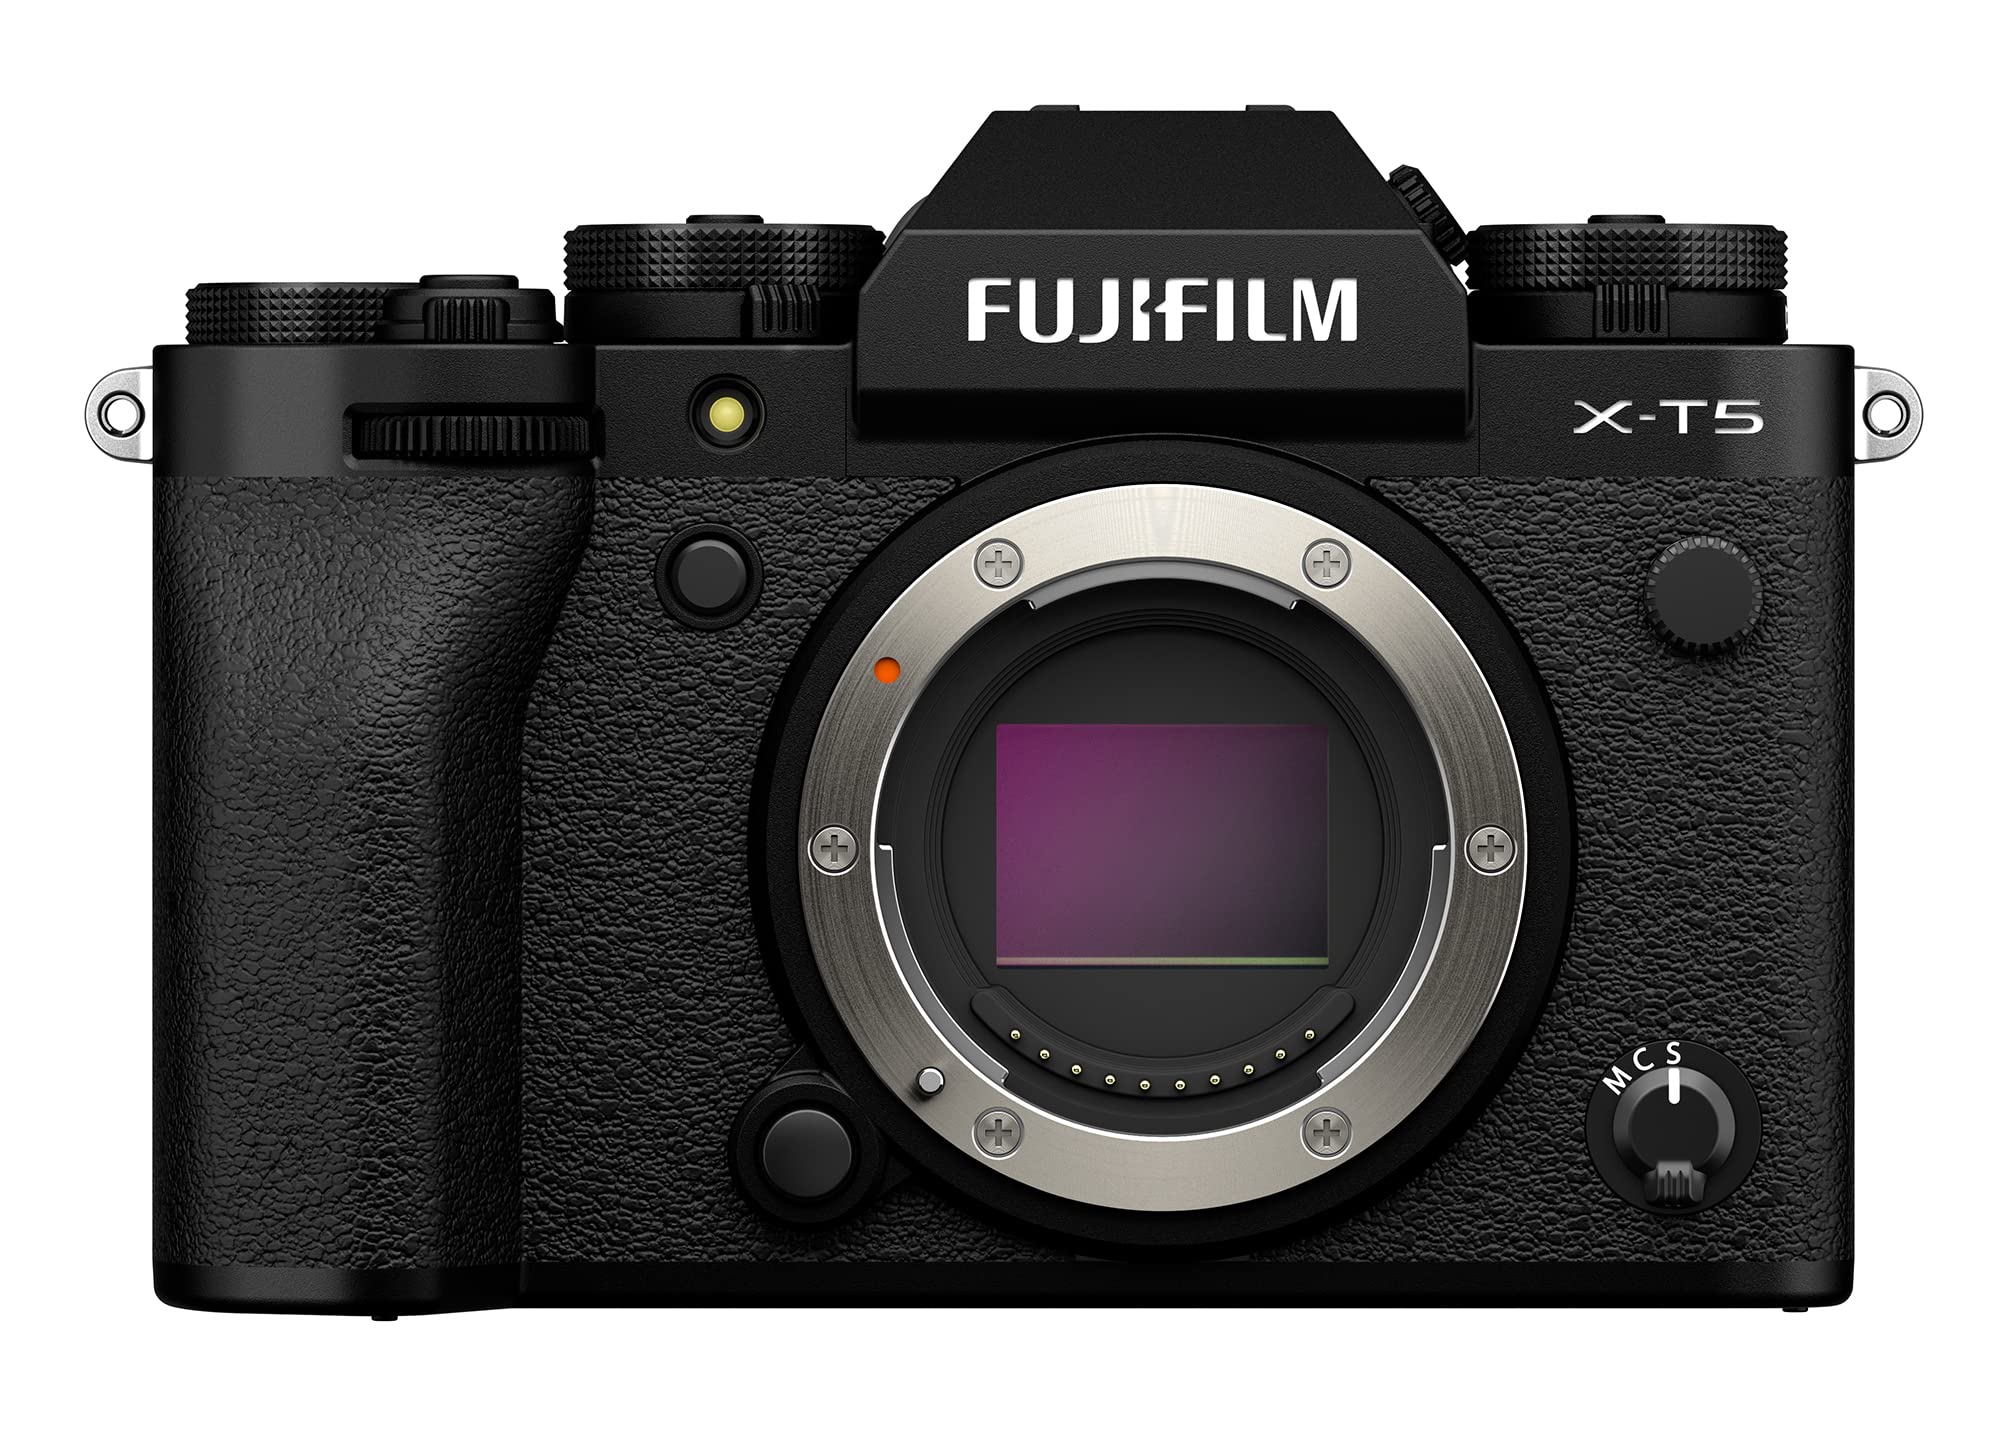 Fujifilm X-T5 Mirrorless Digital Camera Body and Lens K...